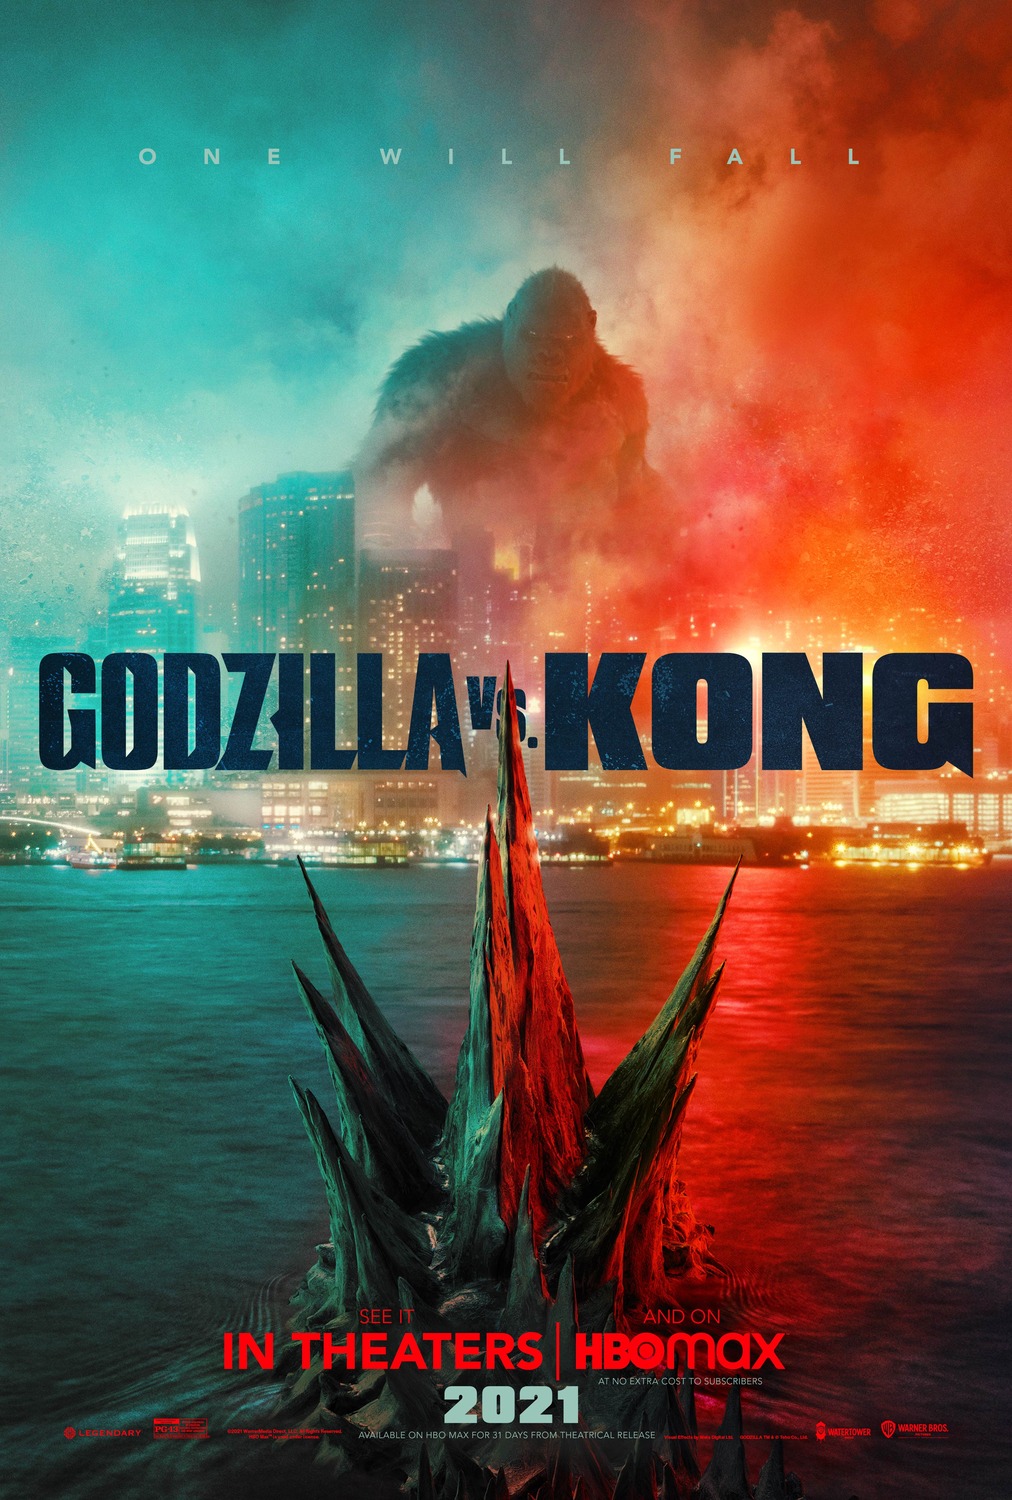 Filme Godzilla vs Kong no Cine Itaguari; confira programação completa